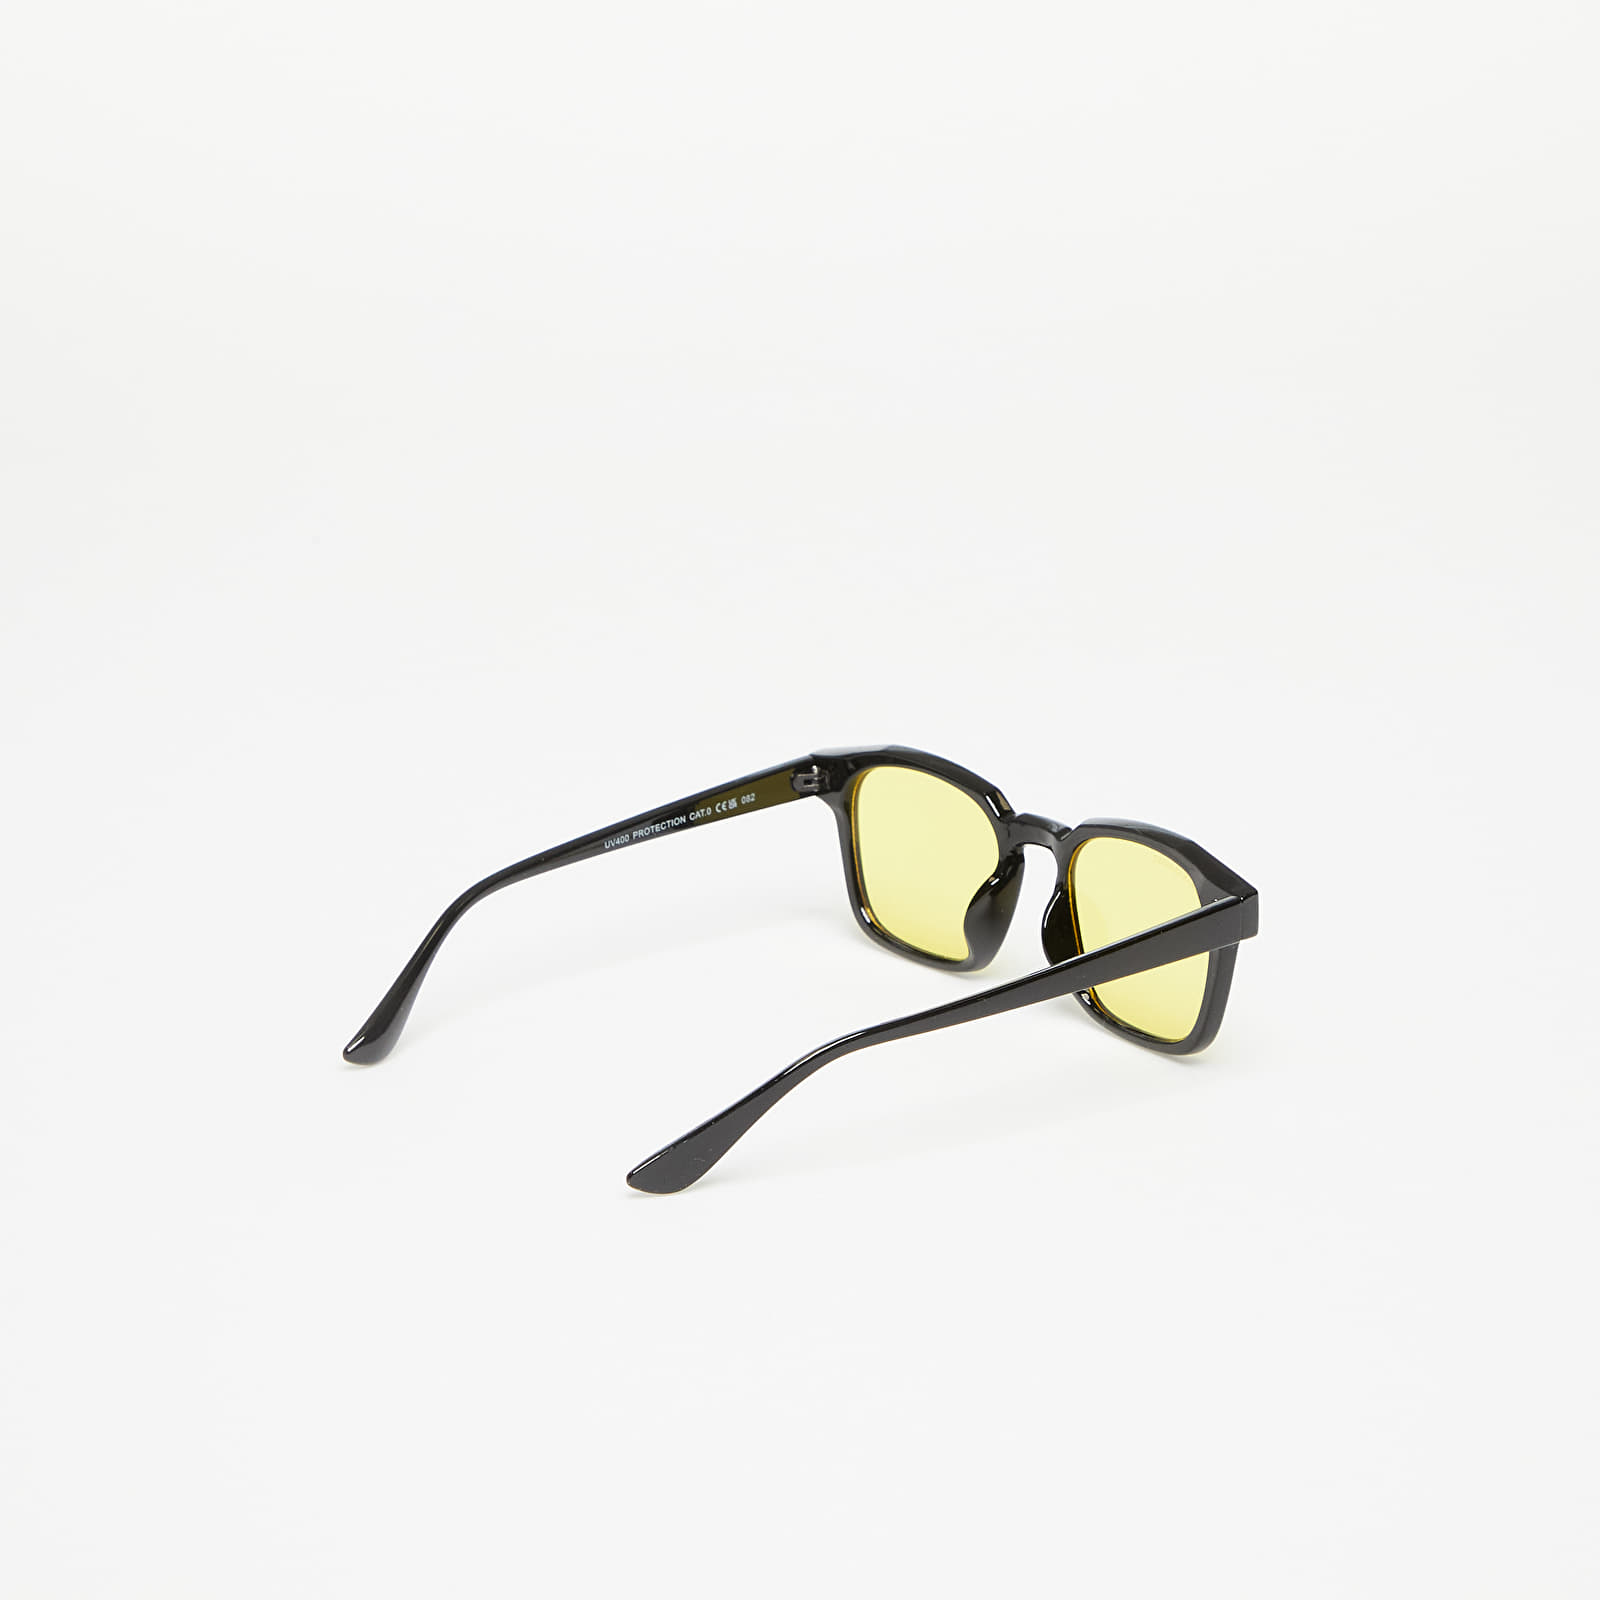 Sunglasses Queens Yellowlow Case Urban Black/ | Classics Maui Sunglasses With